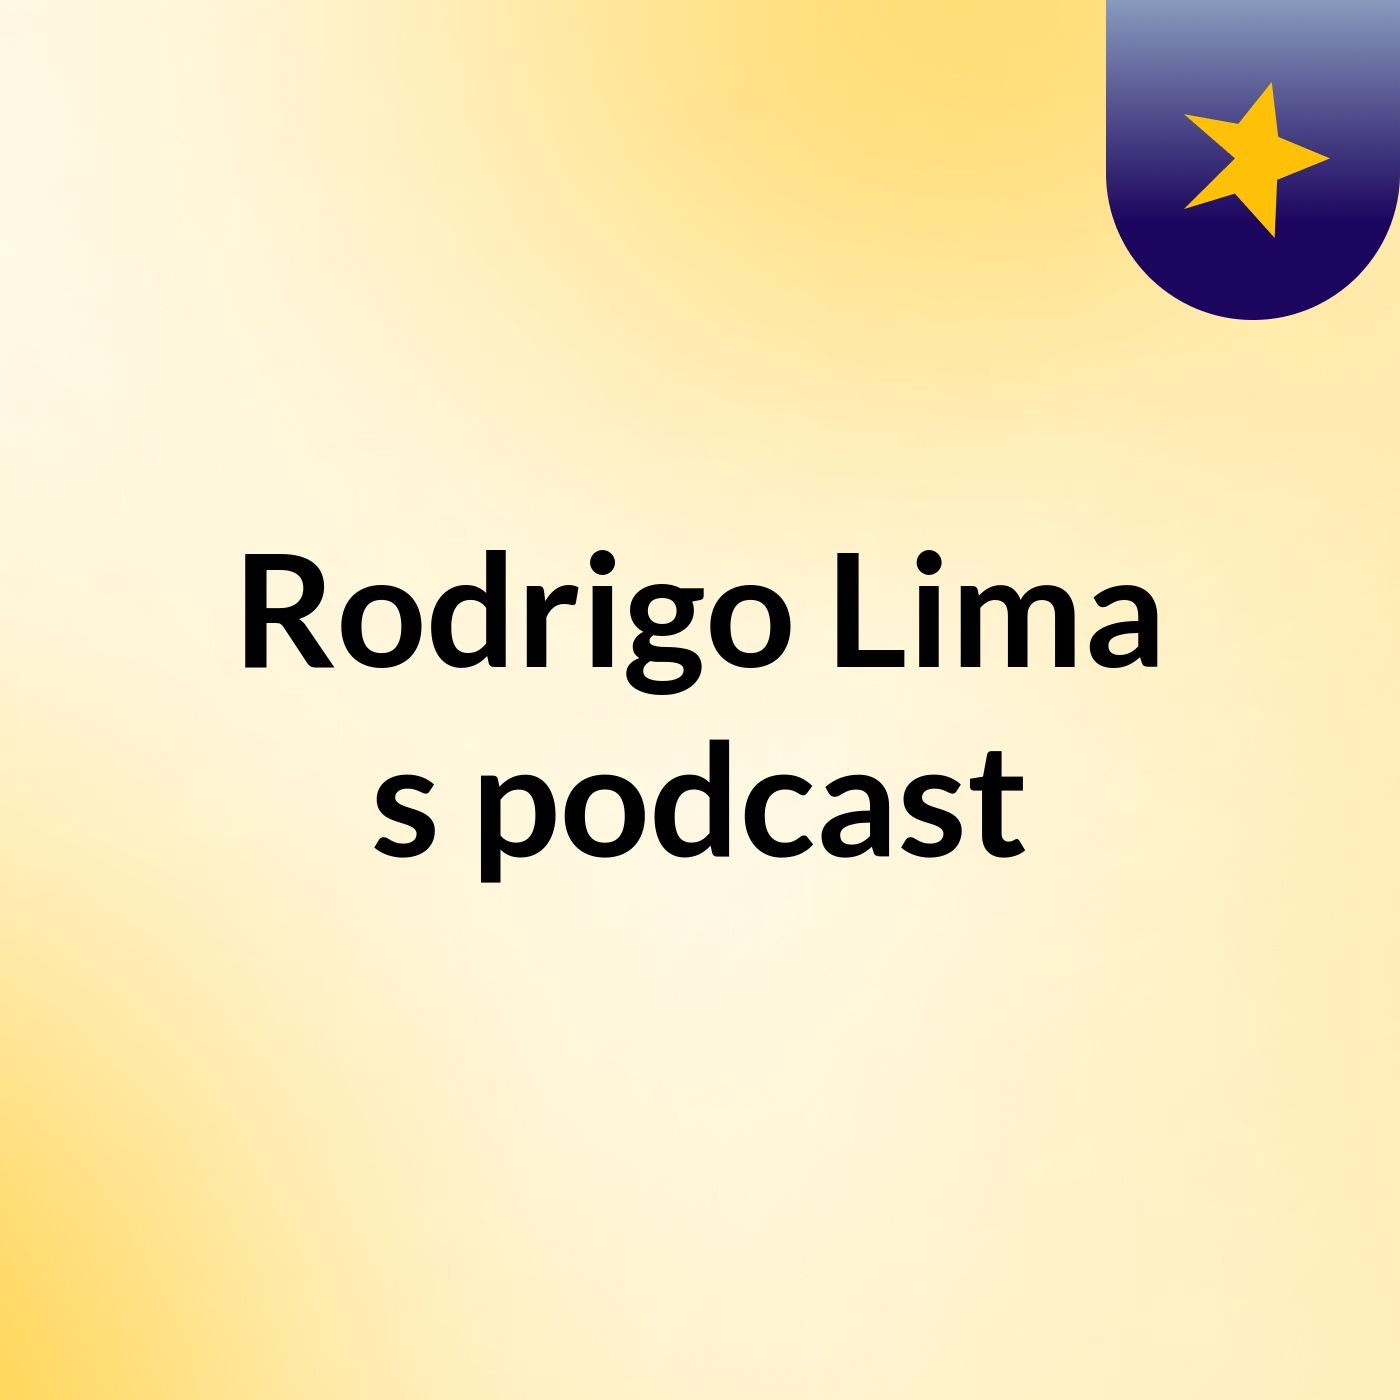 Rodrigo Lima's podcast